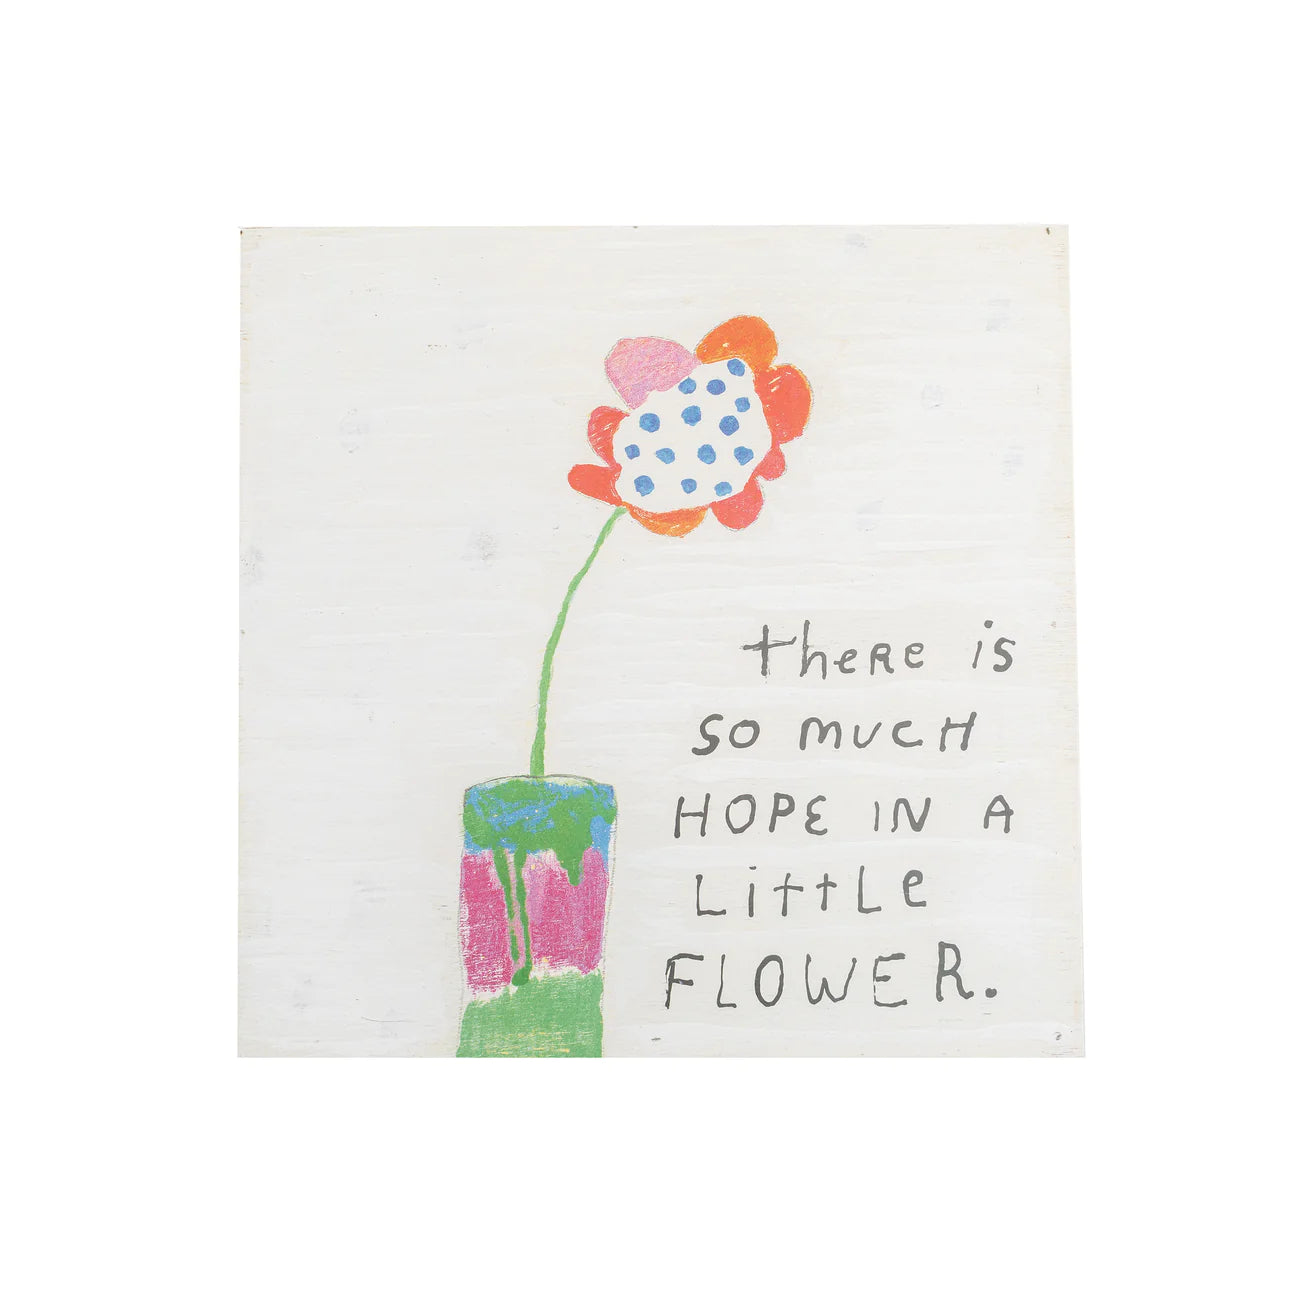 Hope in a flower art poster